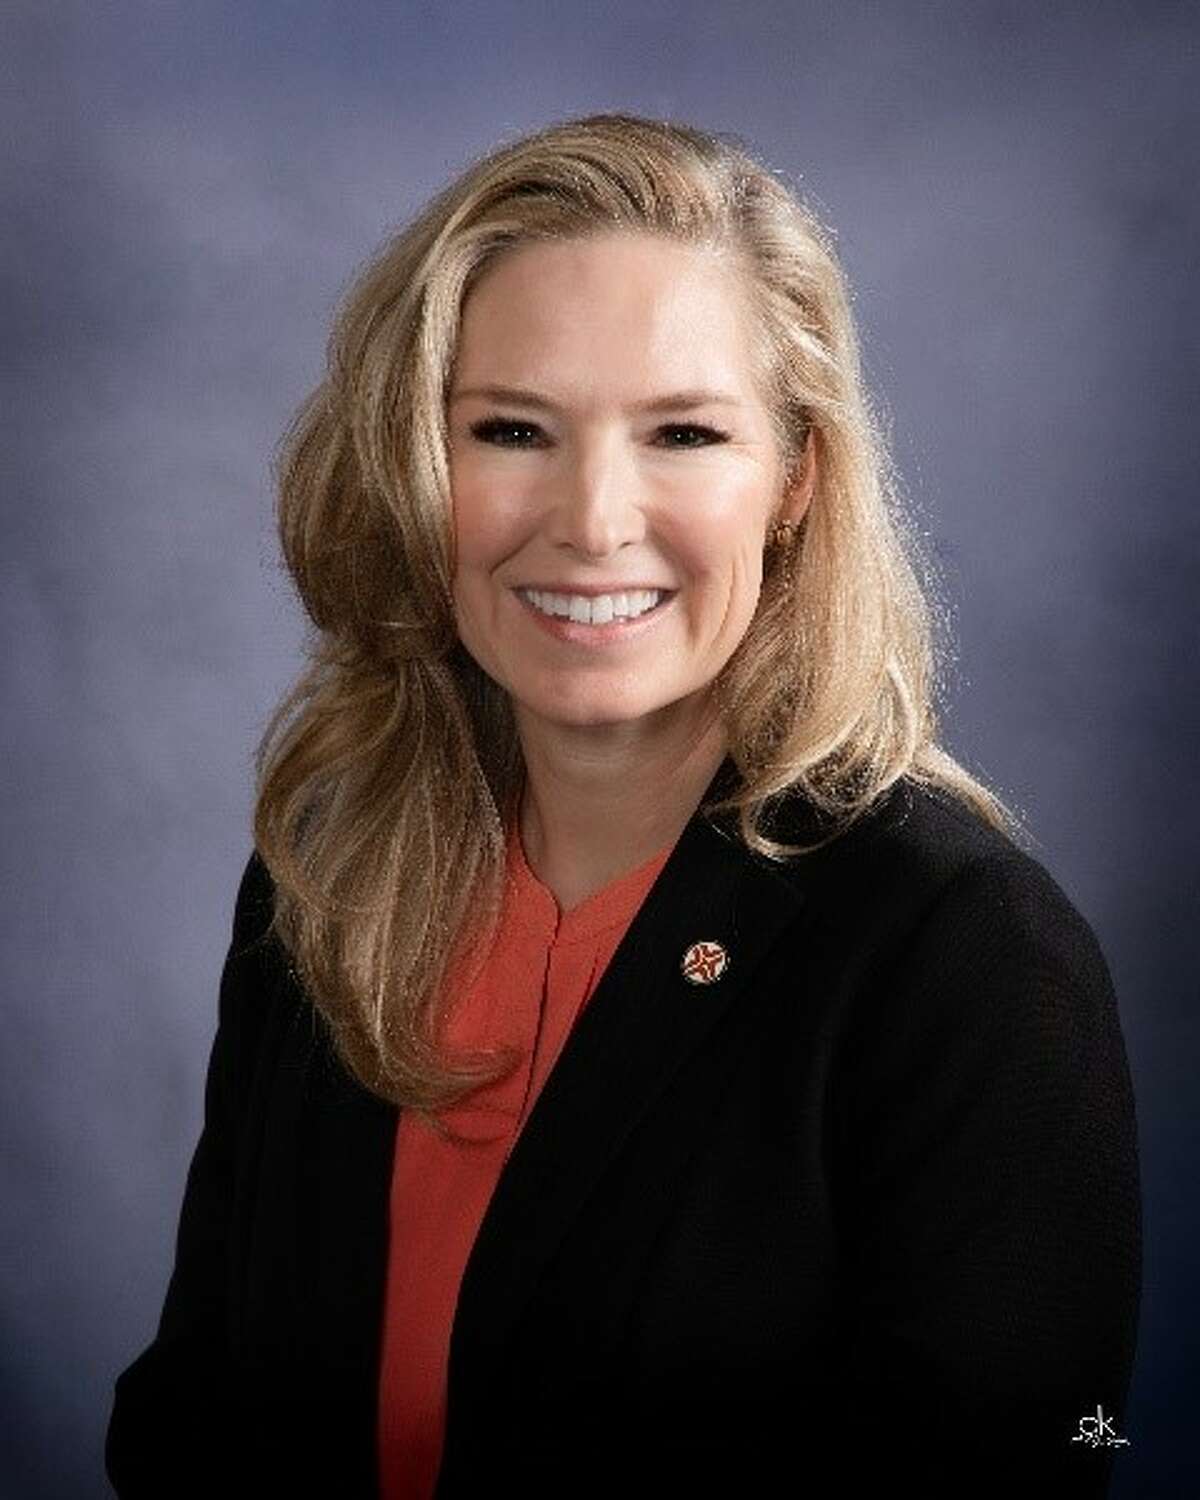 Angelle Rhemann began her new role as CNO of HCA Houston Healthcare Tomball on Nov. 1, 2022.